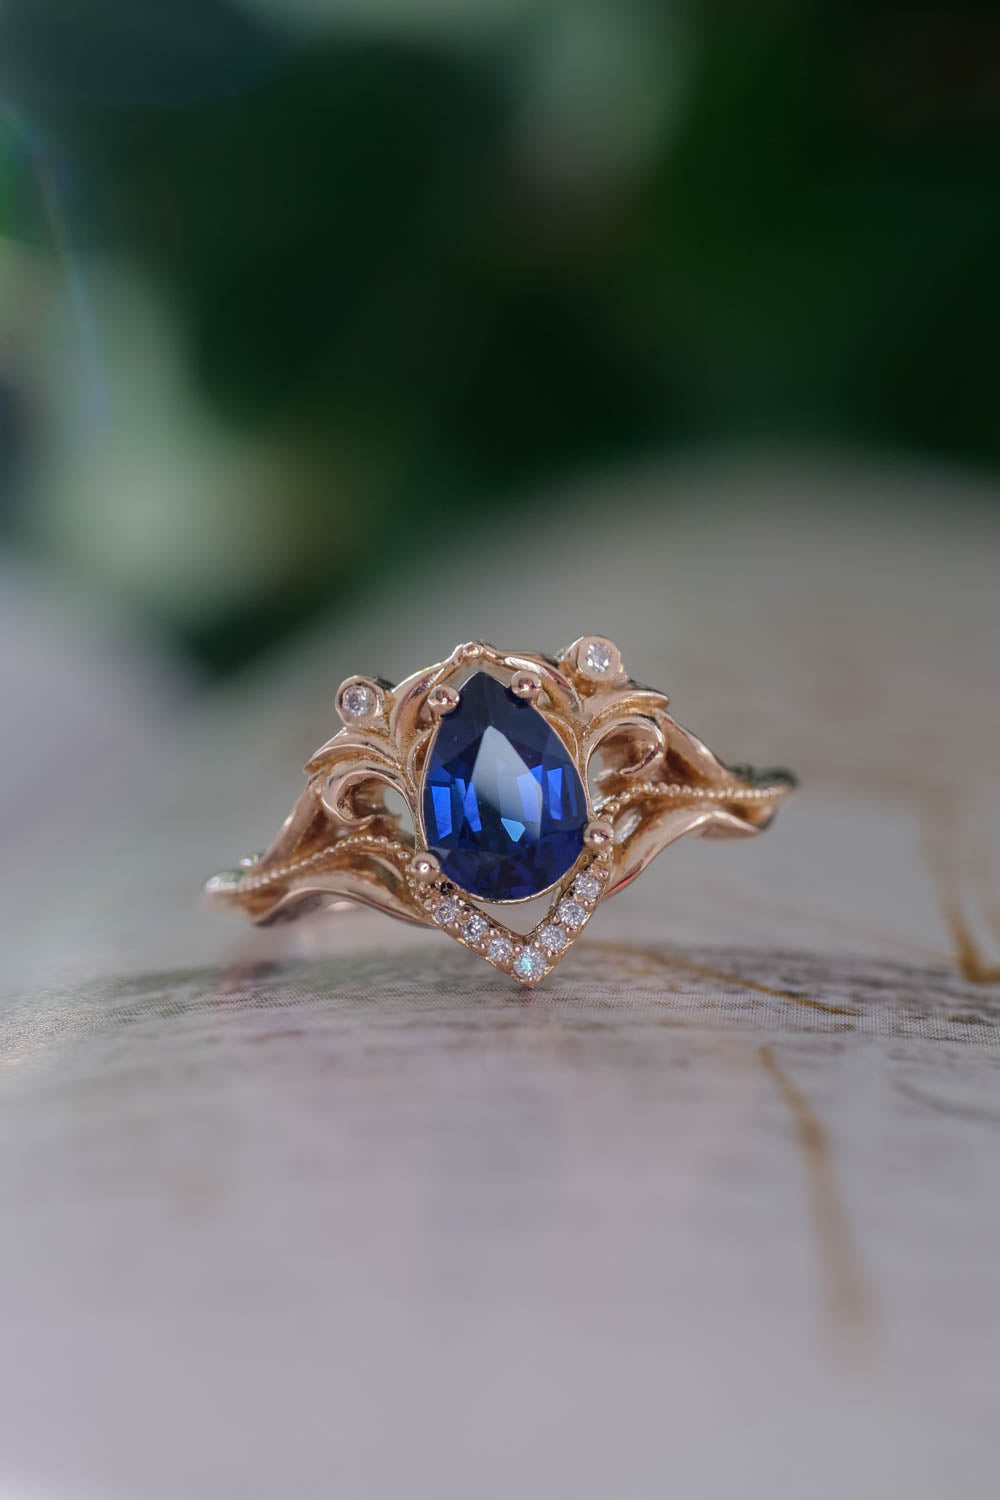 Art nouveau bridal ring set with lab sapphire / Lida - Eden Garden Jewelry™